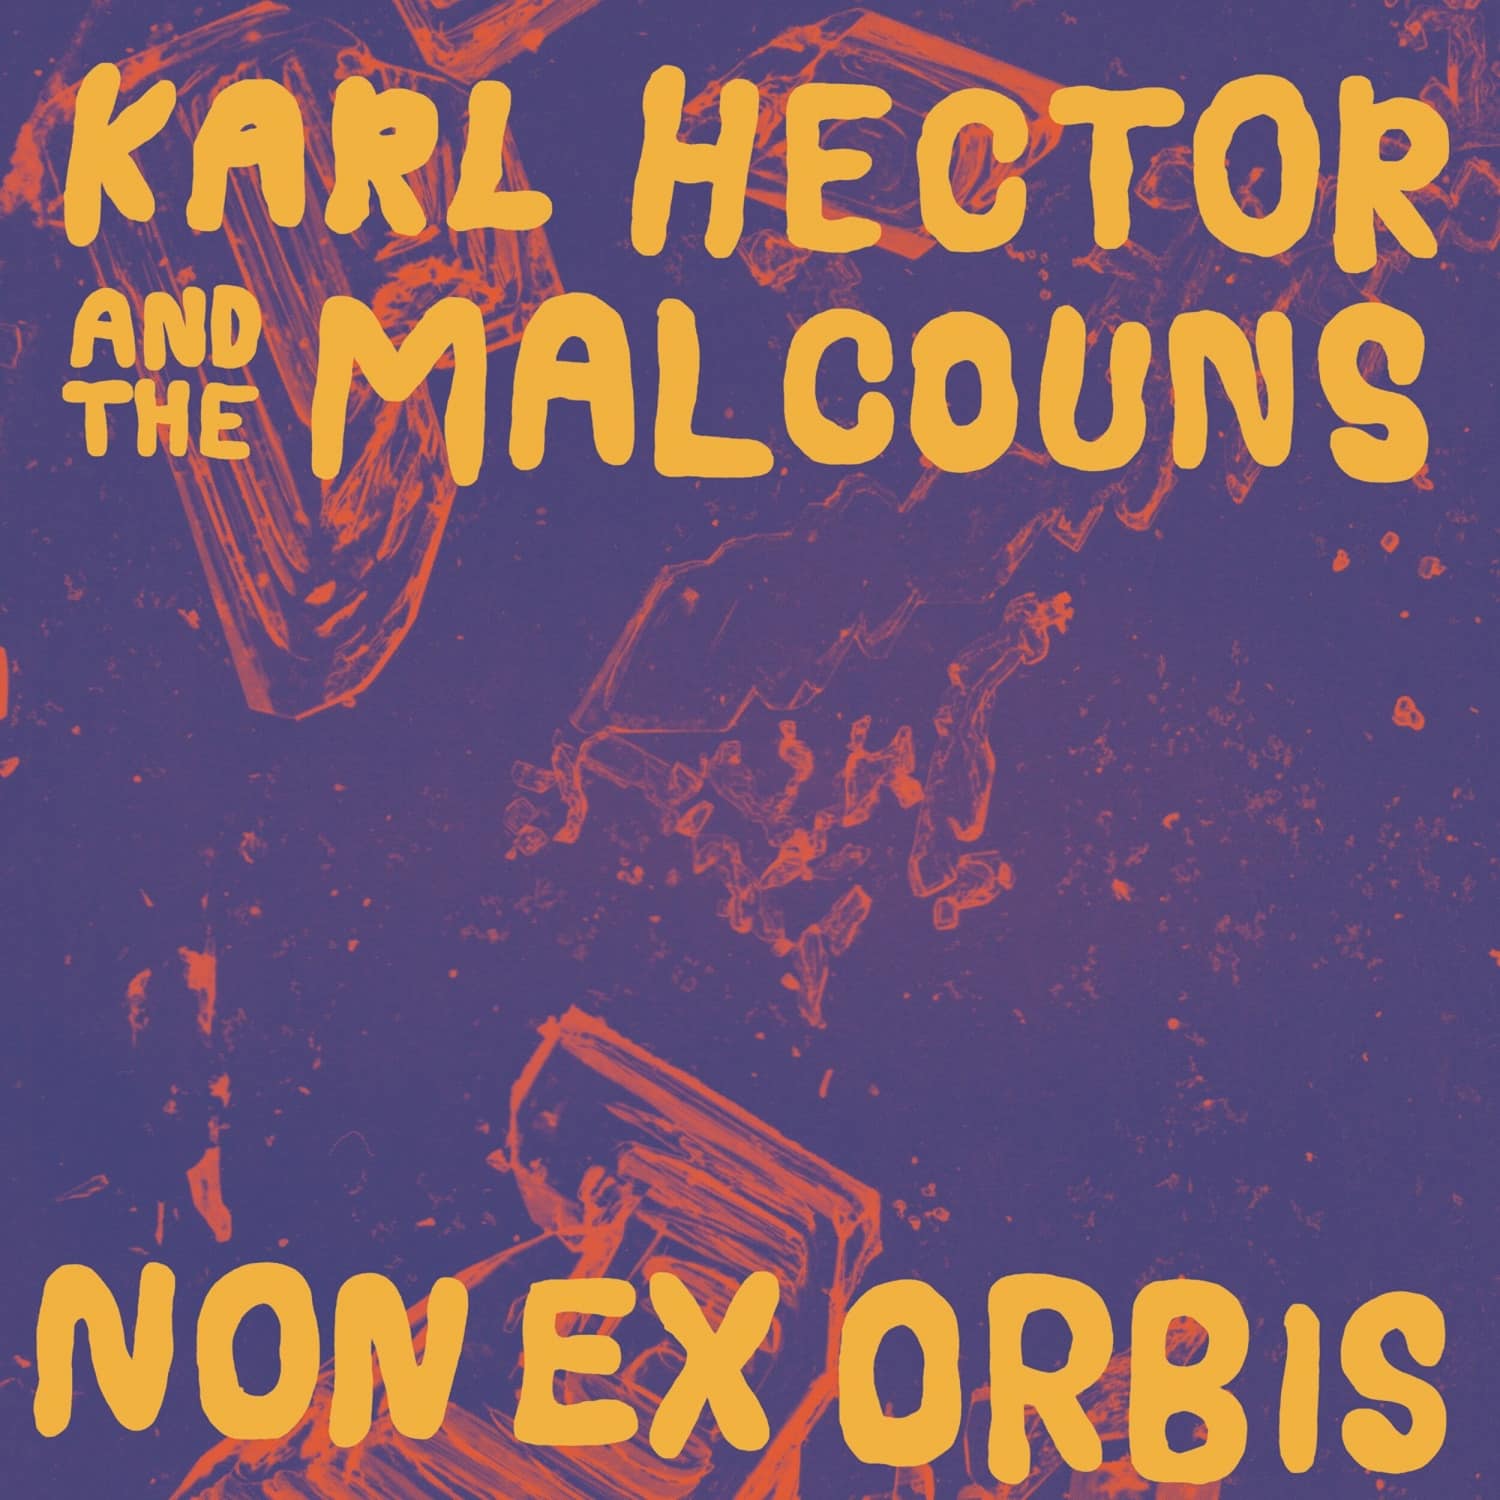 Karl Hector & The Malcouns - NON EX ORBIS 